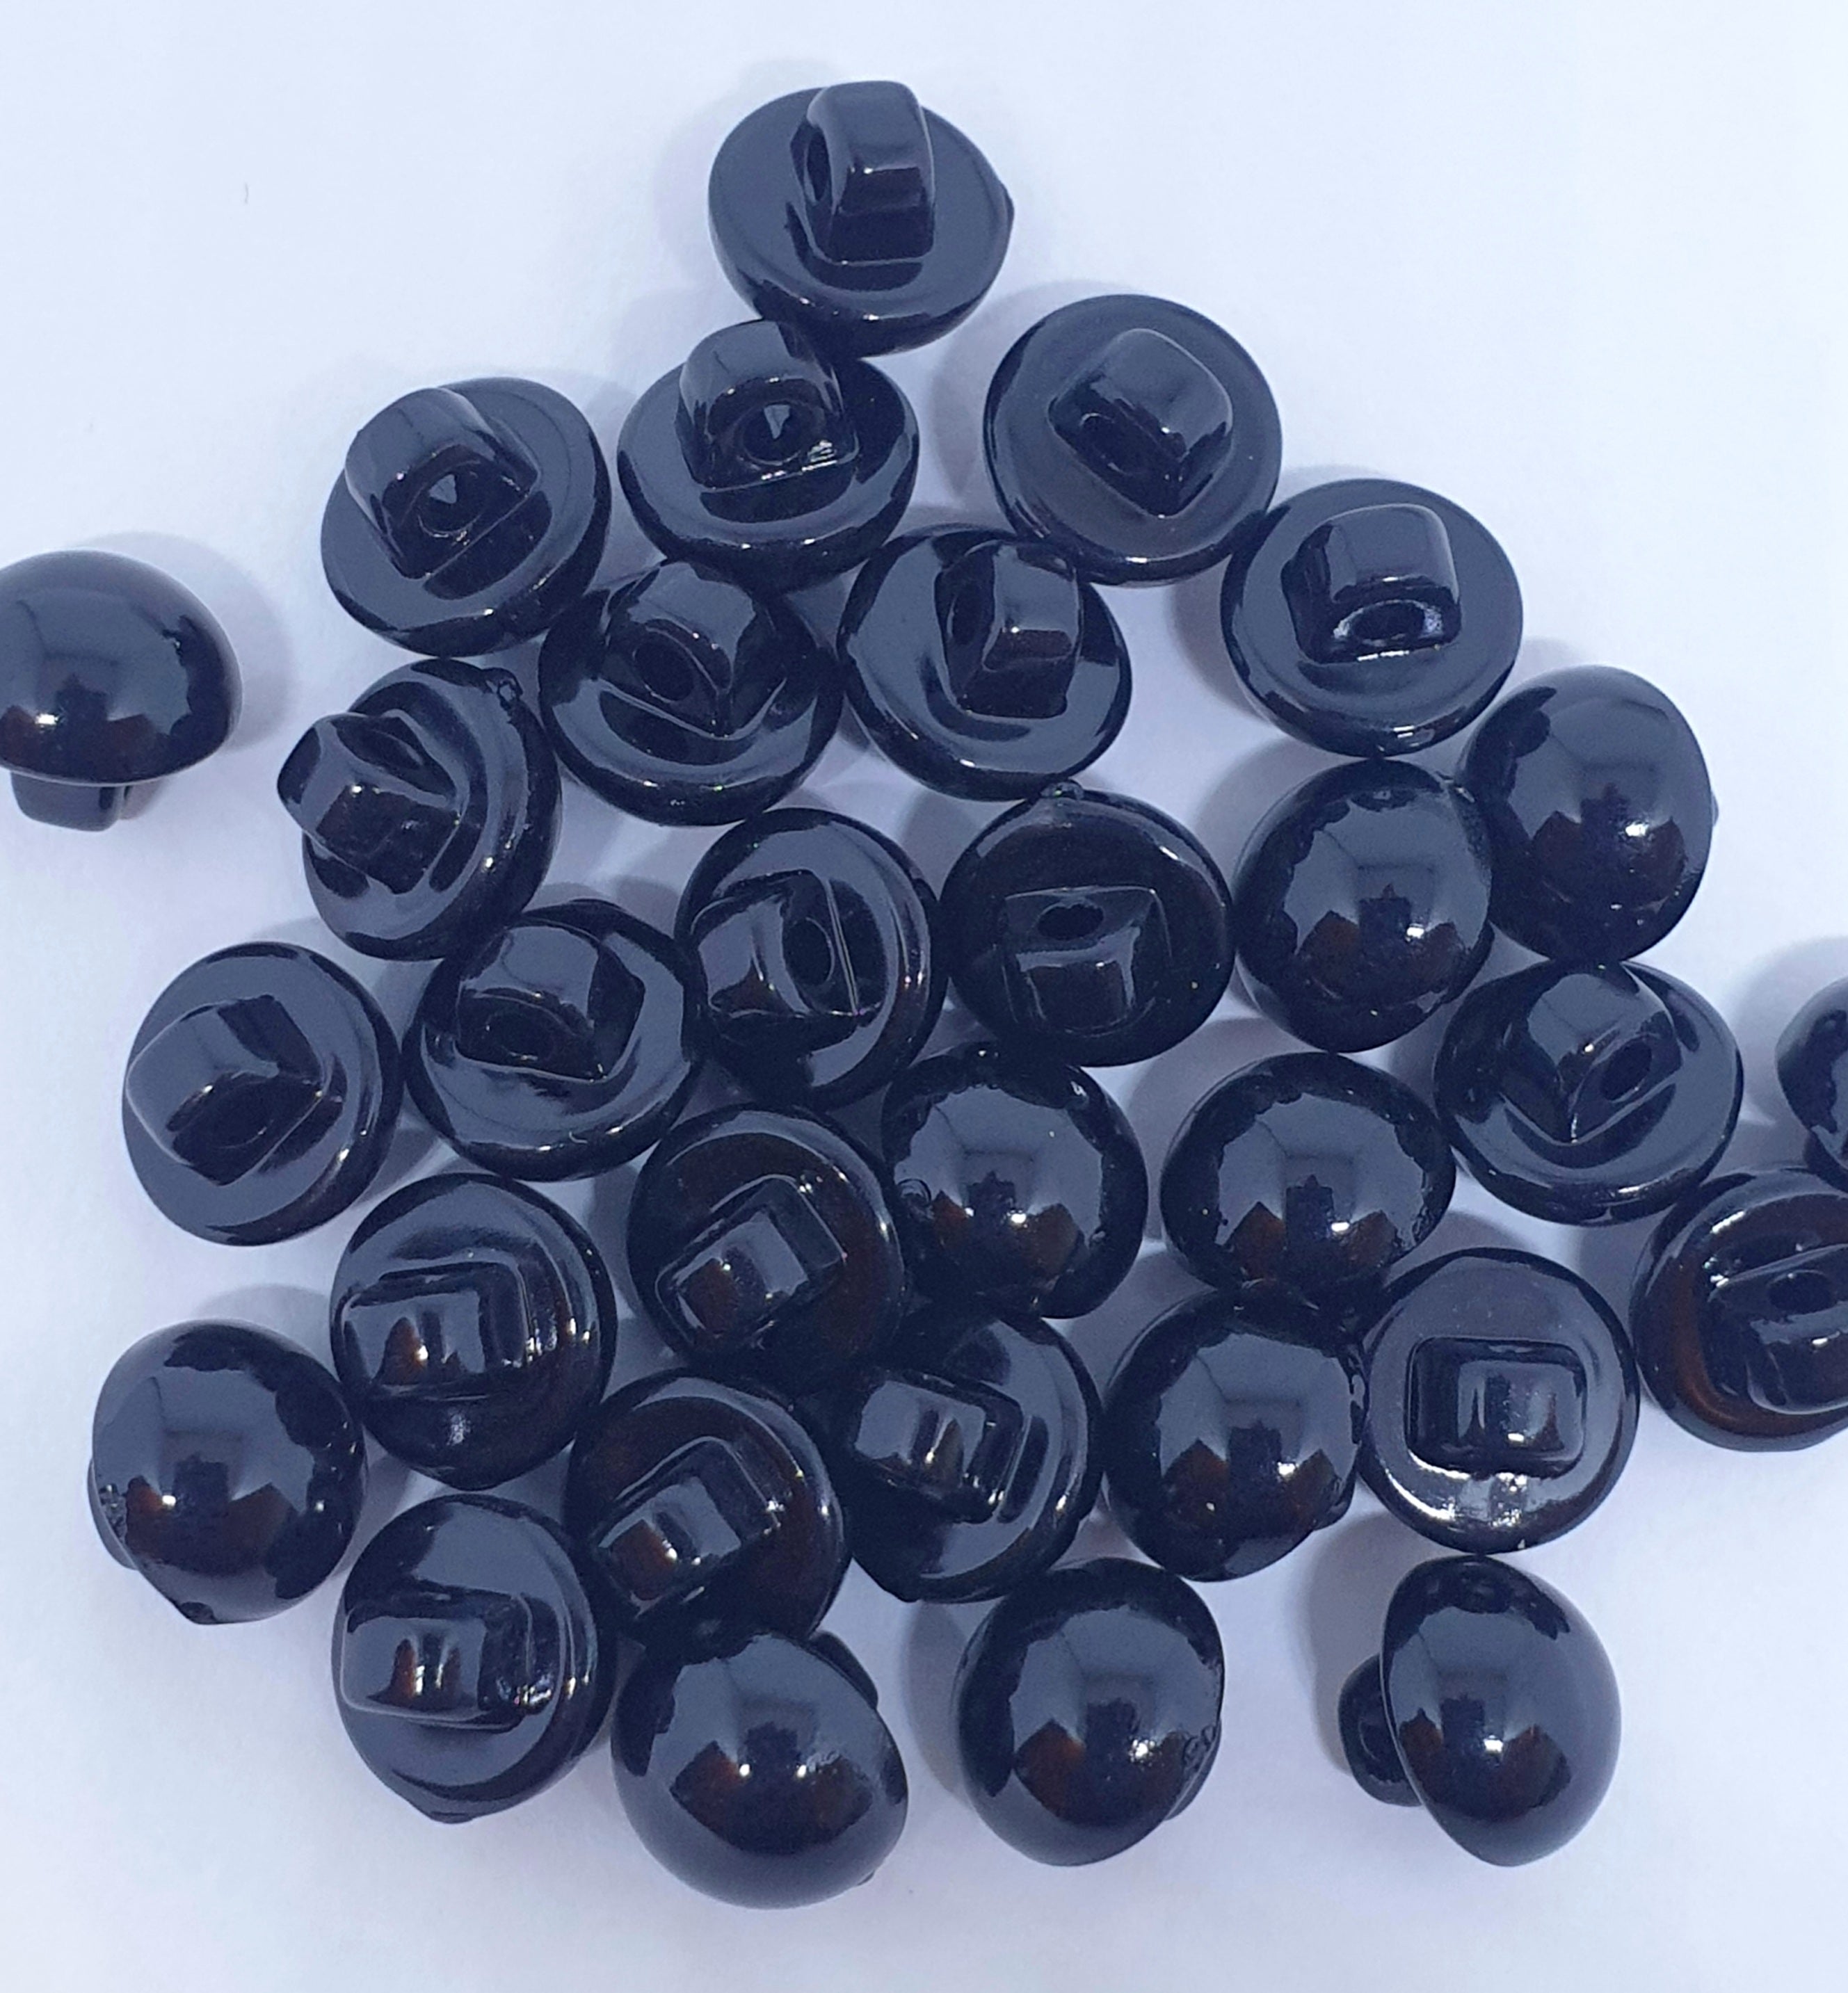 MajorCrafts 30pcs 10mm Black High-Grade Acrylic Small Round Sewing Mushroom Shank Buttons